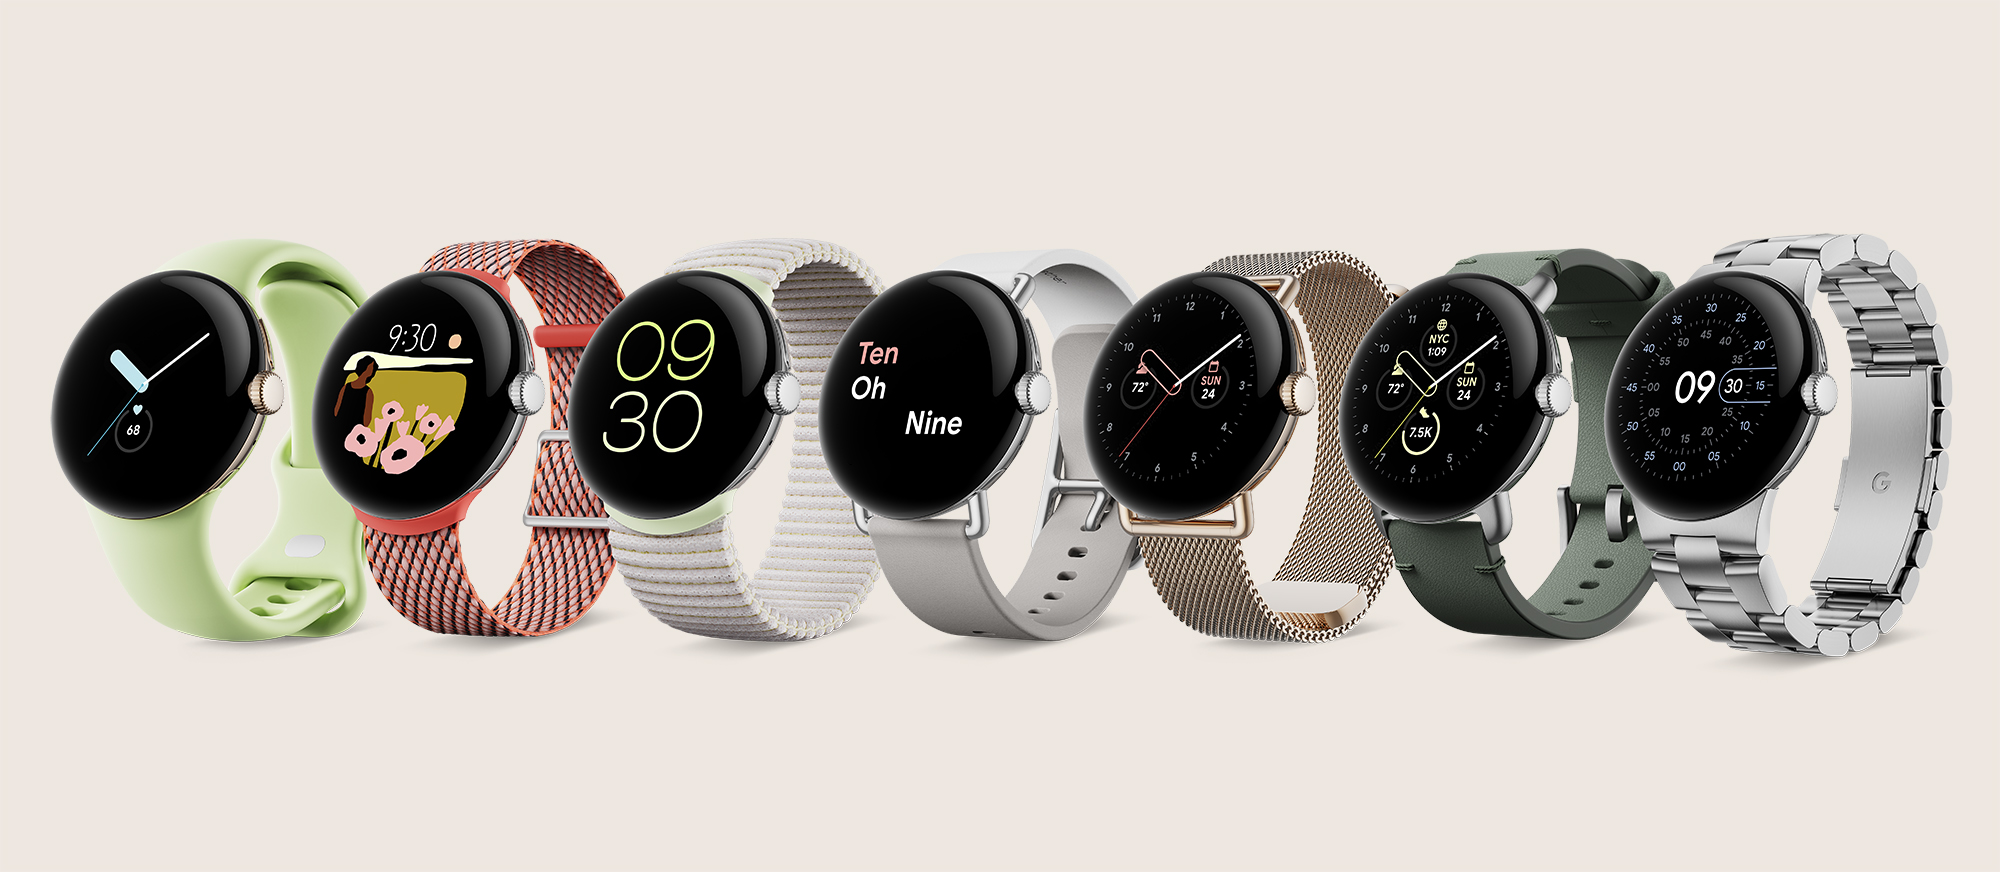 Google Pixel Watch: Details, on new smartwatch